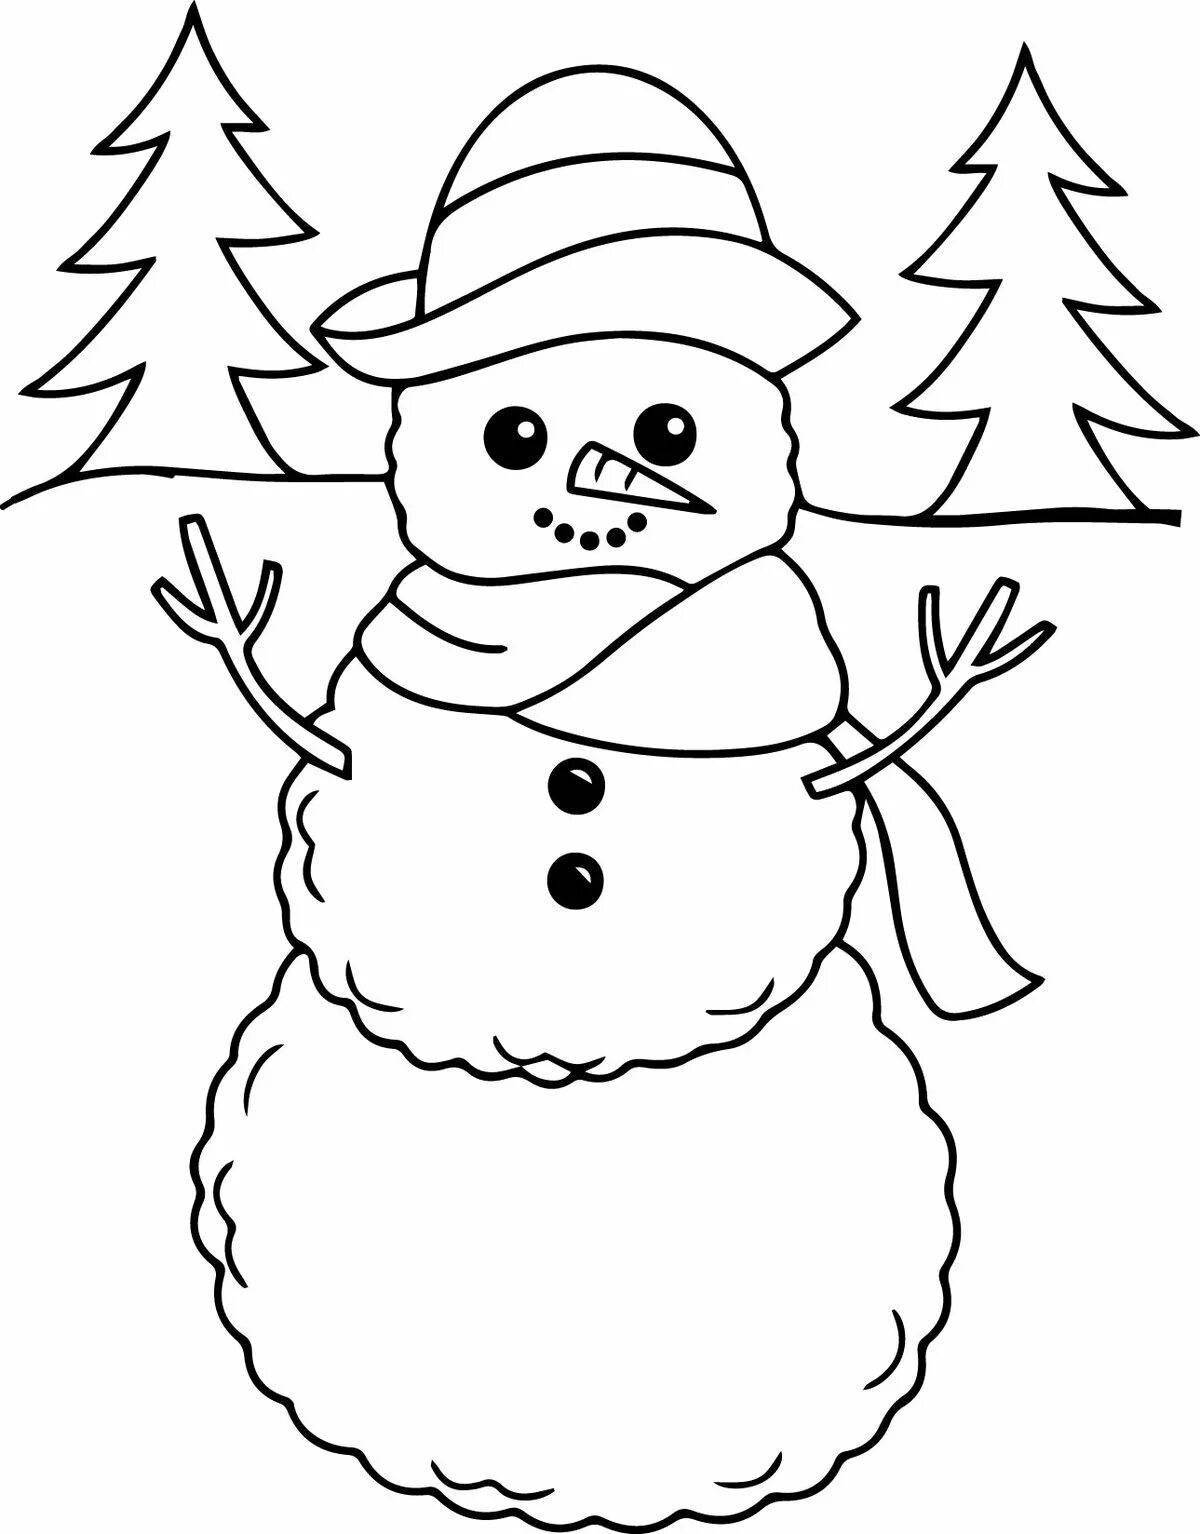 Snowman#3